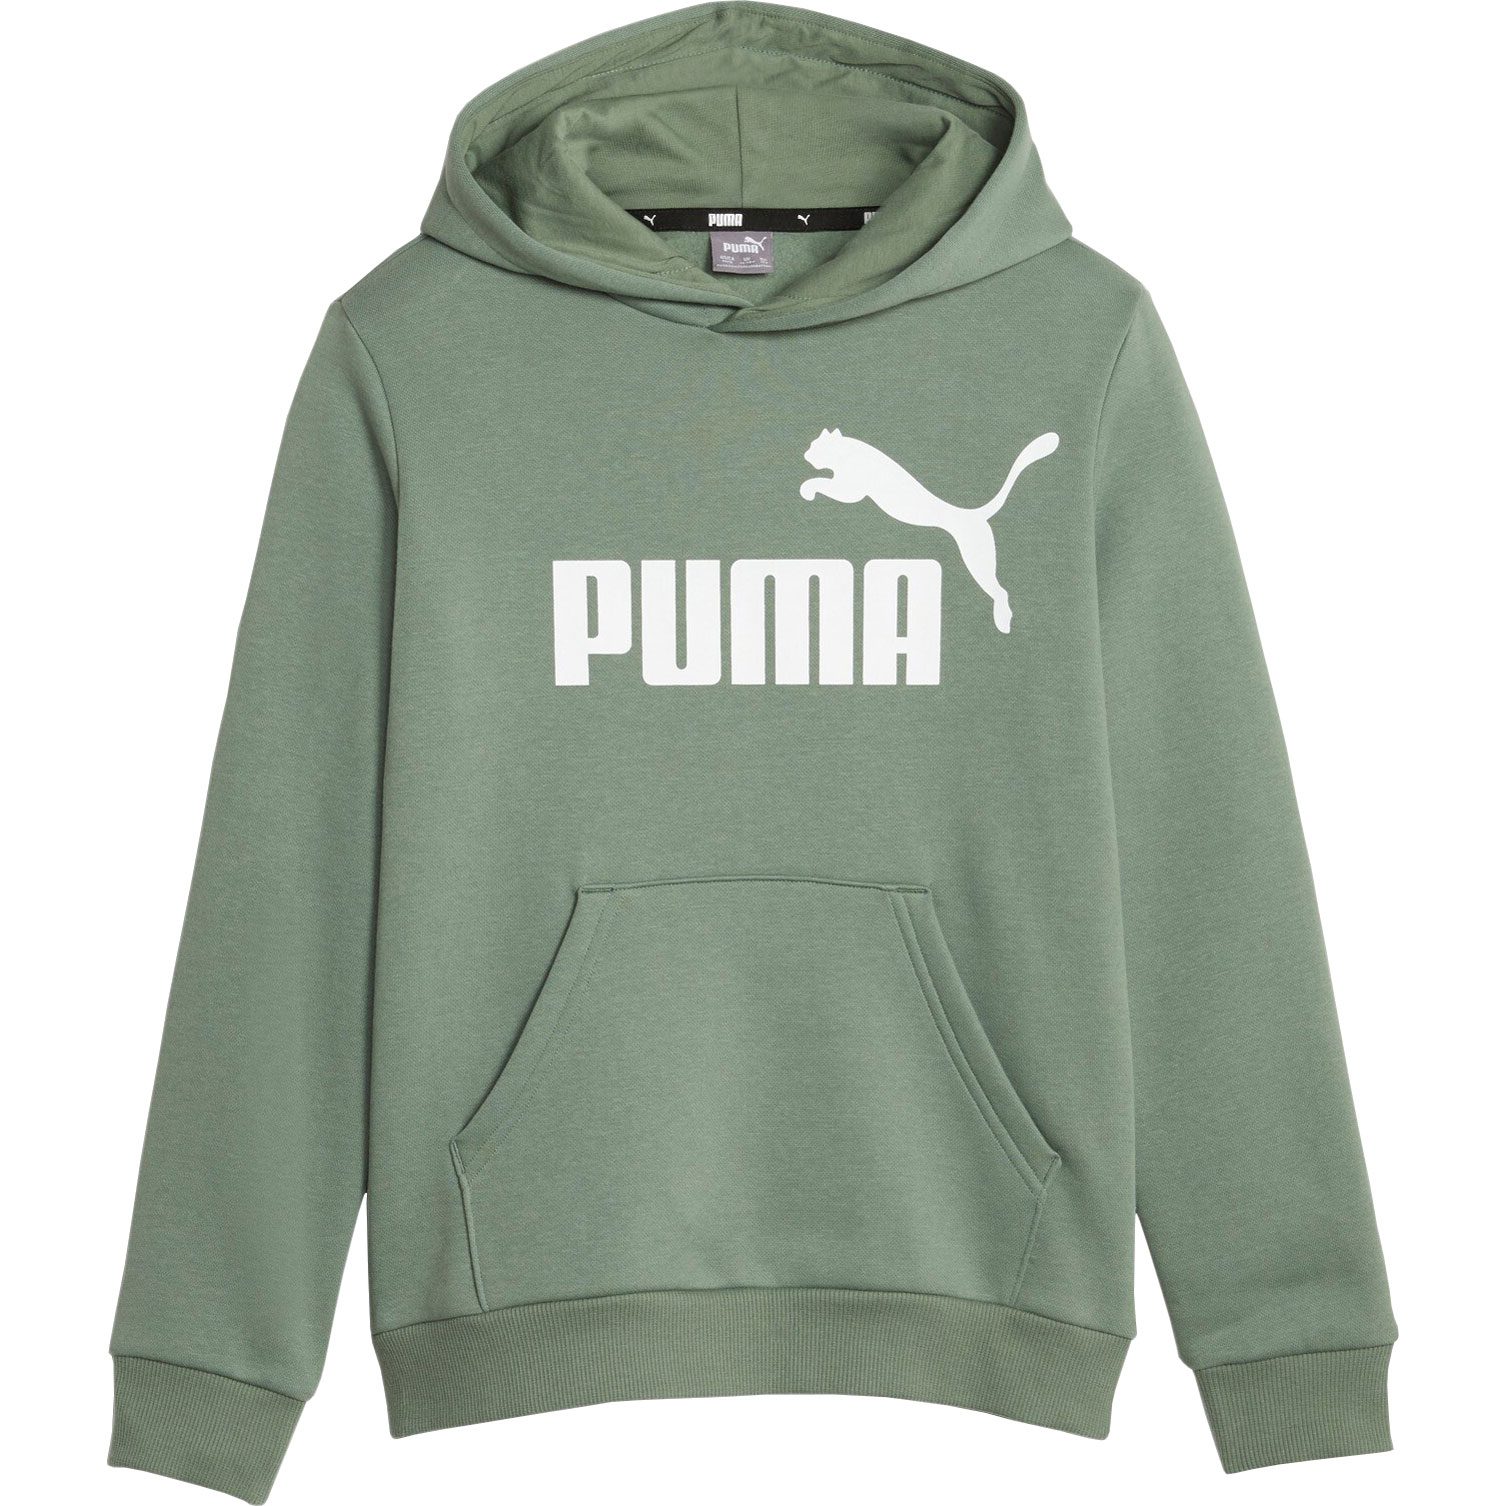 - Bittl Boys Logo FL Big Puma Hoodie at eucalyptus Essentials Sport Shop